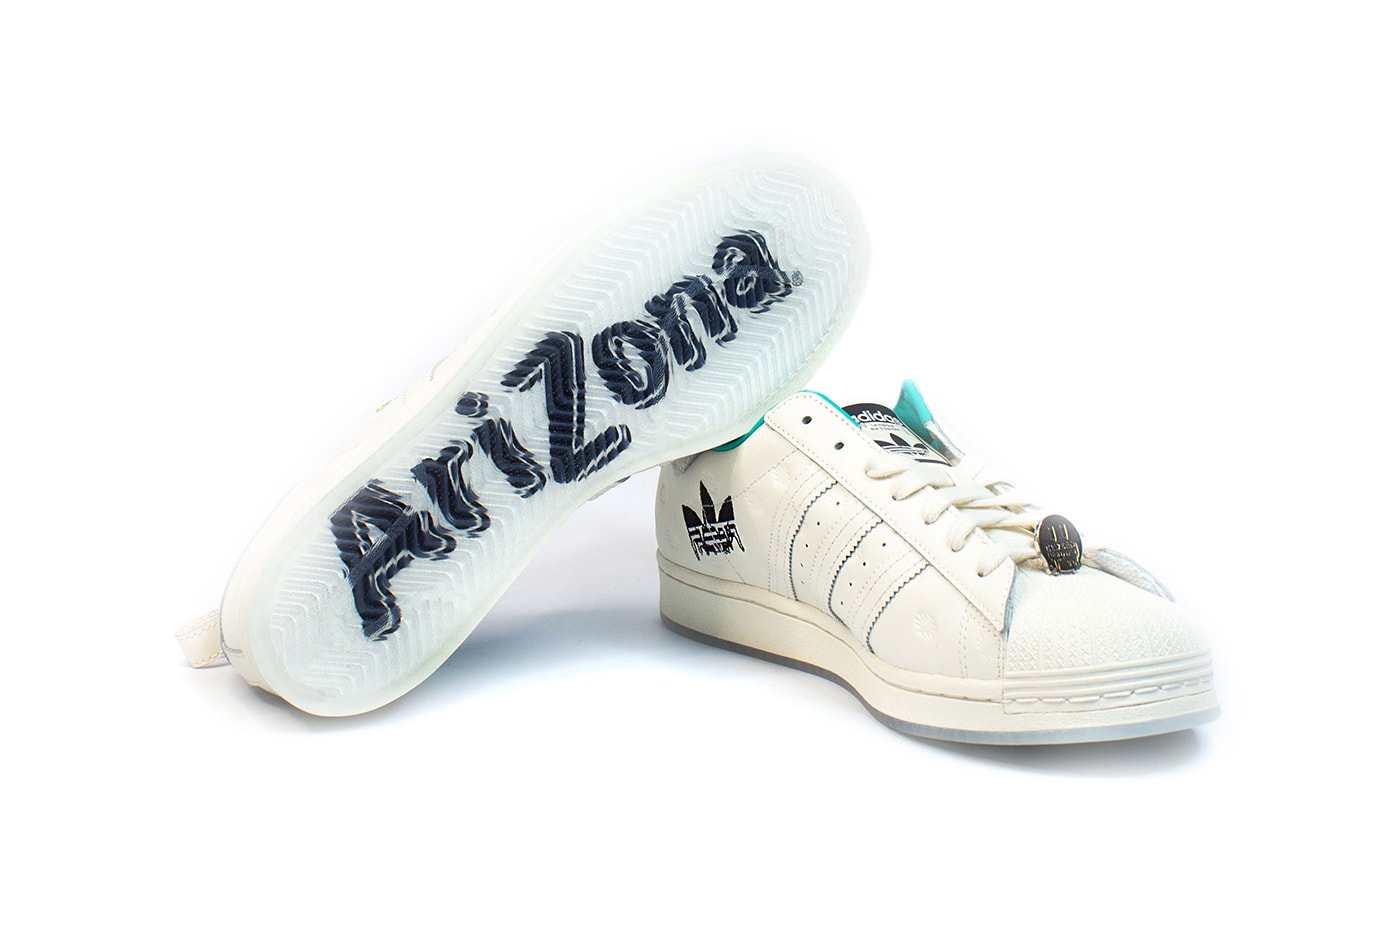 AriZona adidas Originals Superstar 2021 Capsule menswear streetwear sneakers shoes kicks trainers runners ss21 spring summer 2021 iced tea info